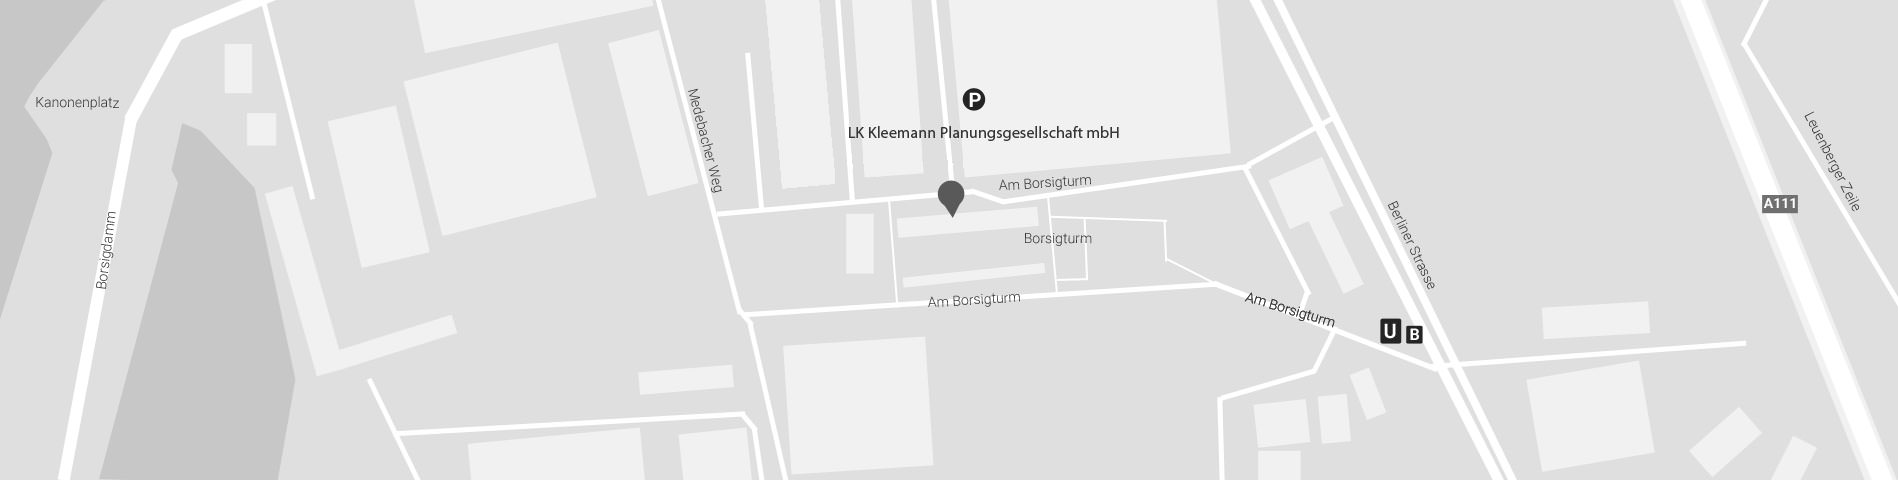 LK Kleemann Planungsgesellschaft mbH